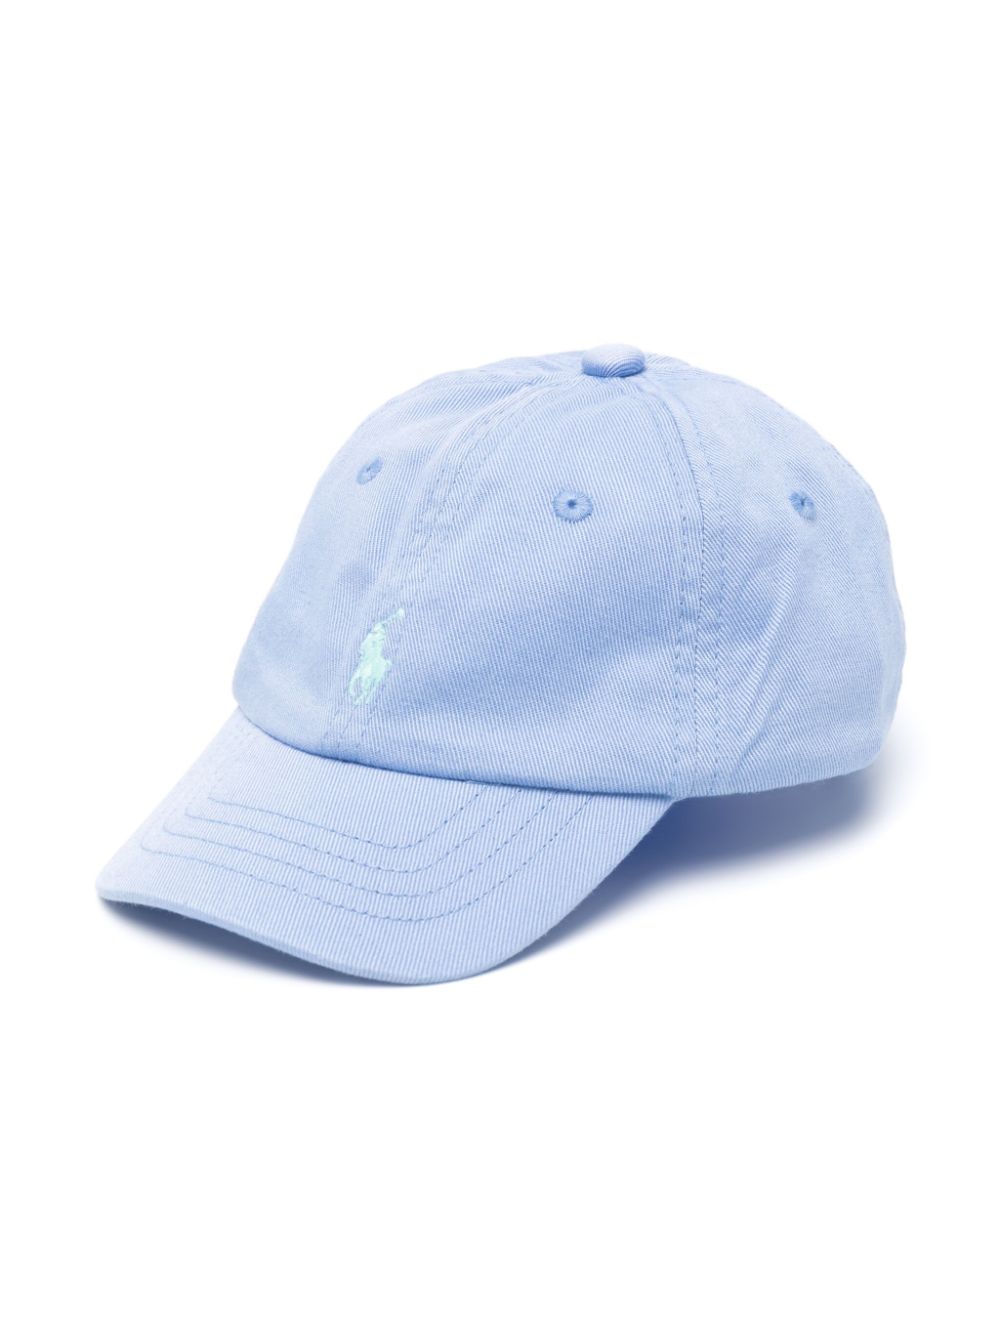 Light blue hat for children with logo